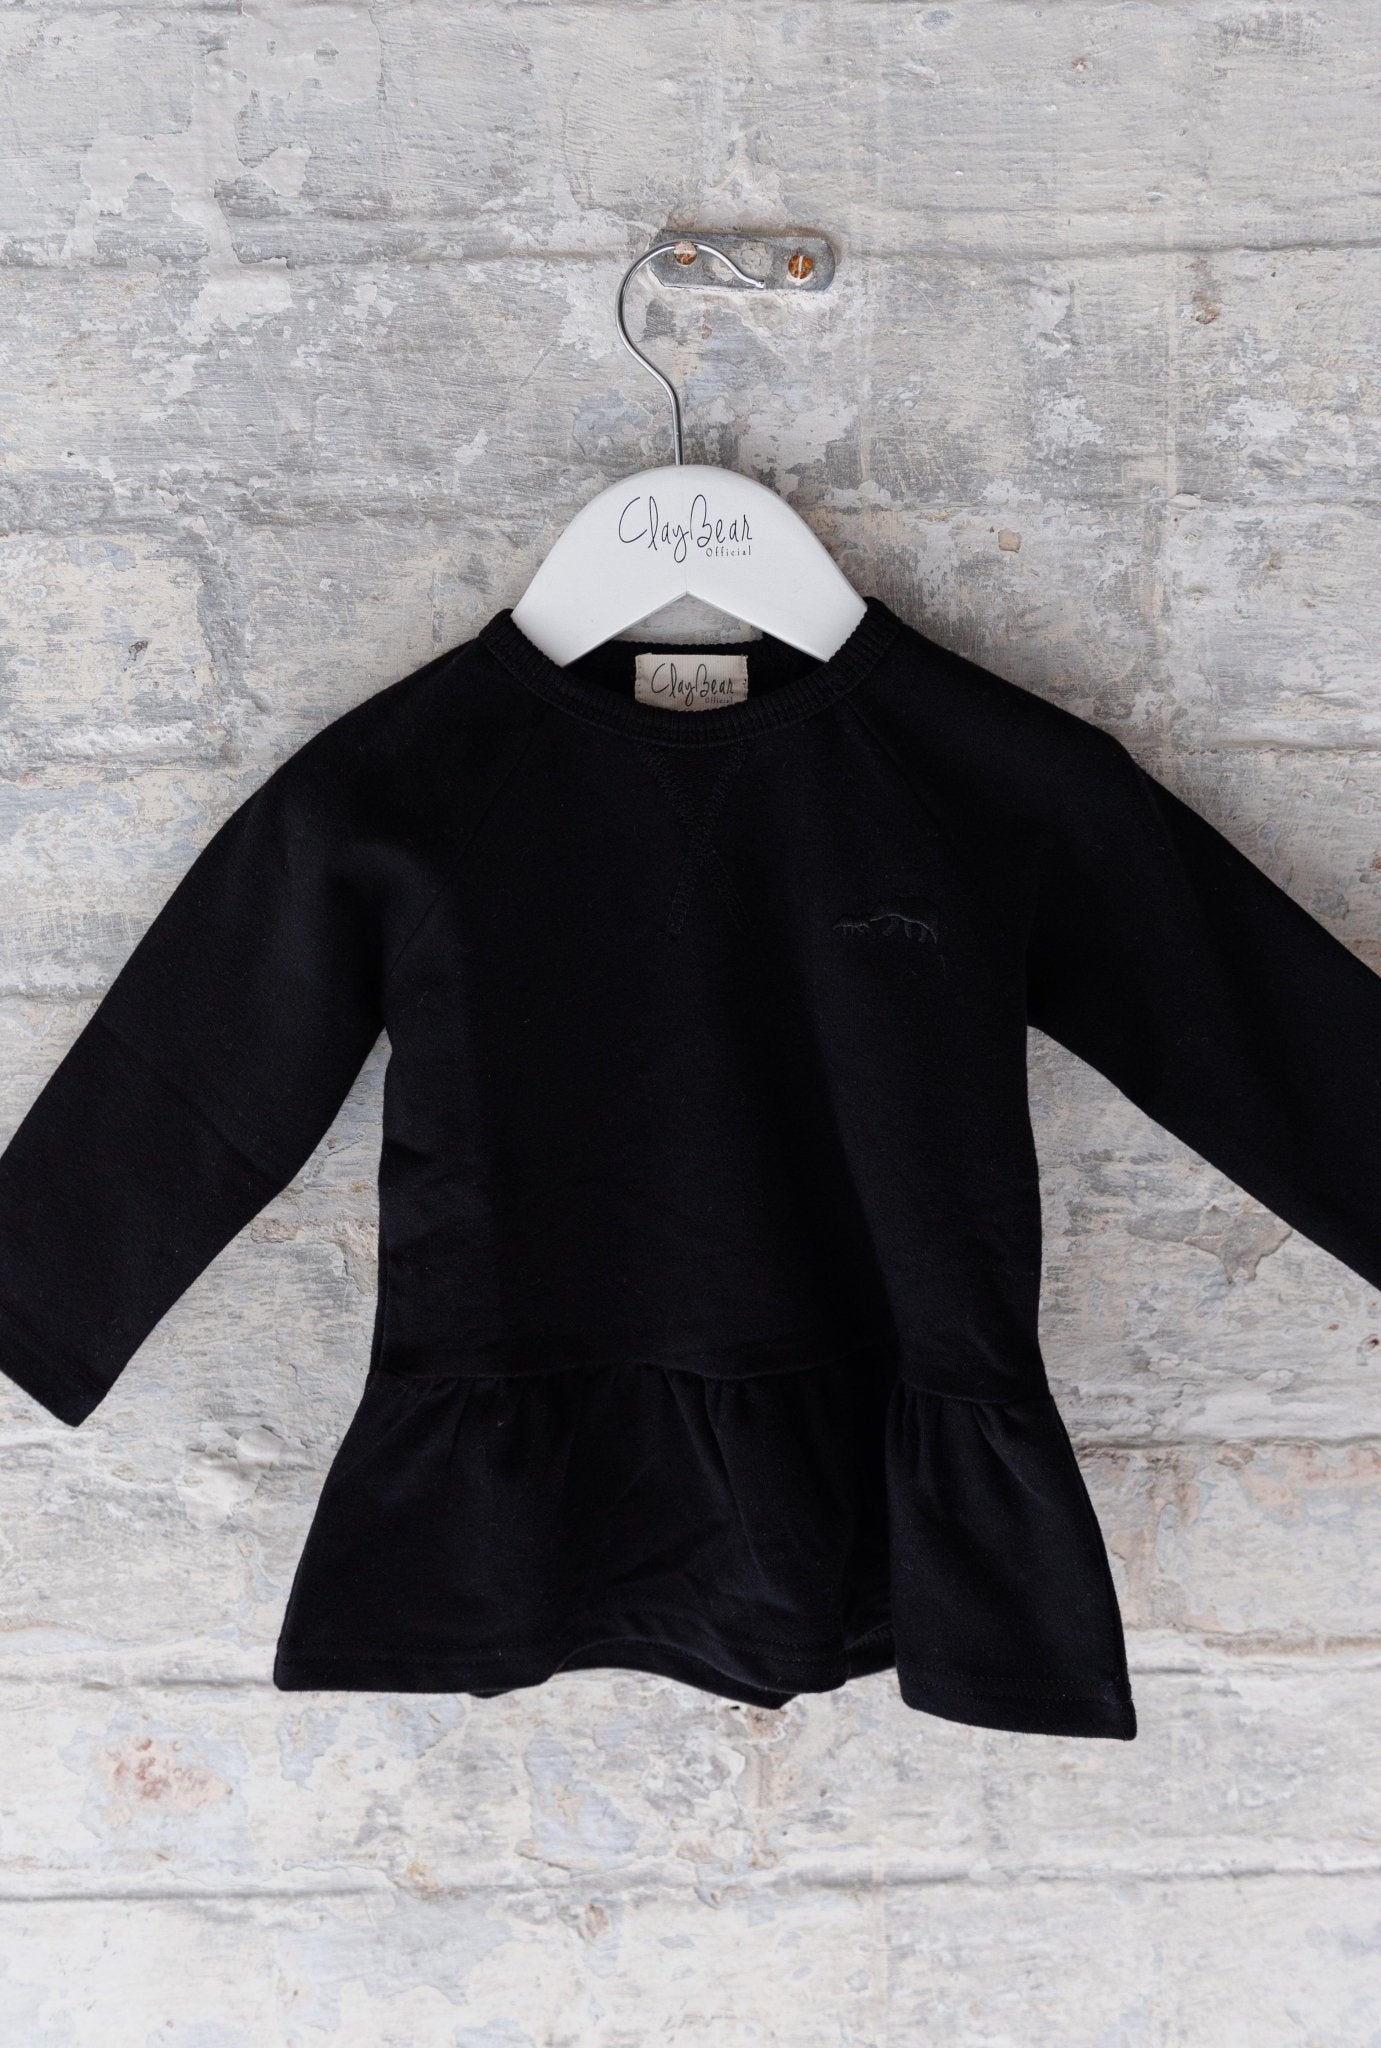 ClayBARE Black Sweatshirt Tunic - ClayBearOfficial 